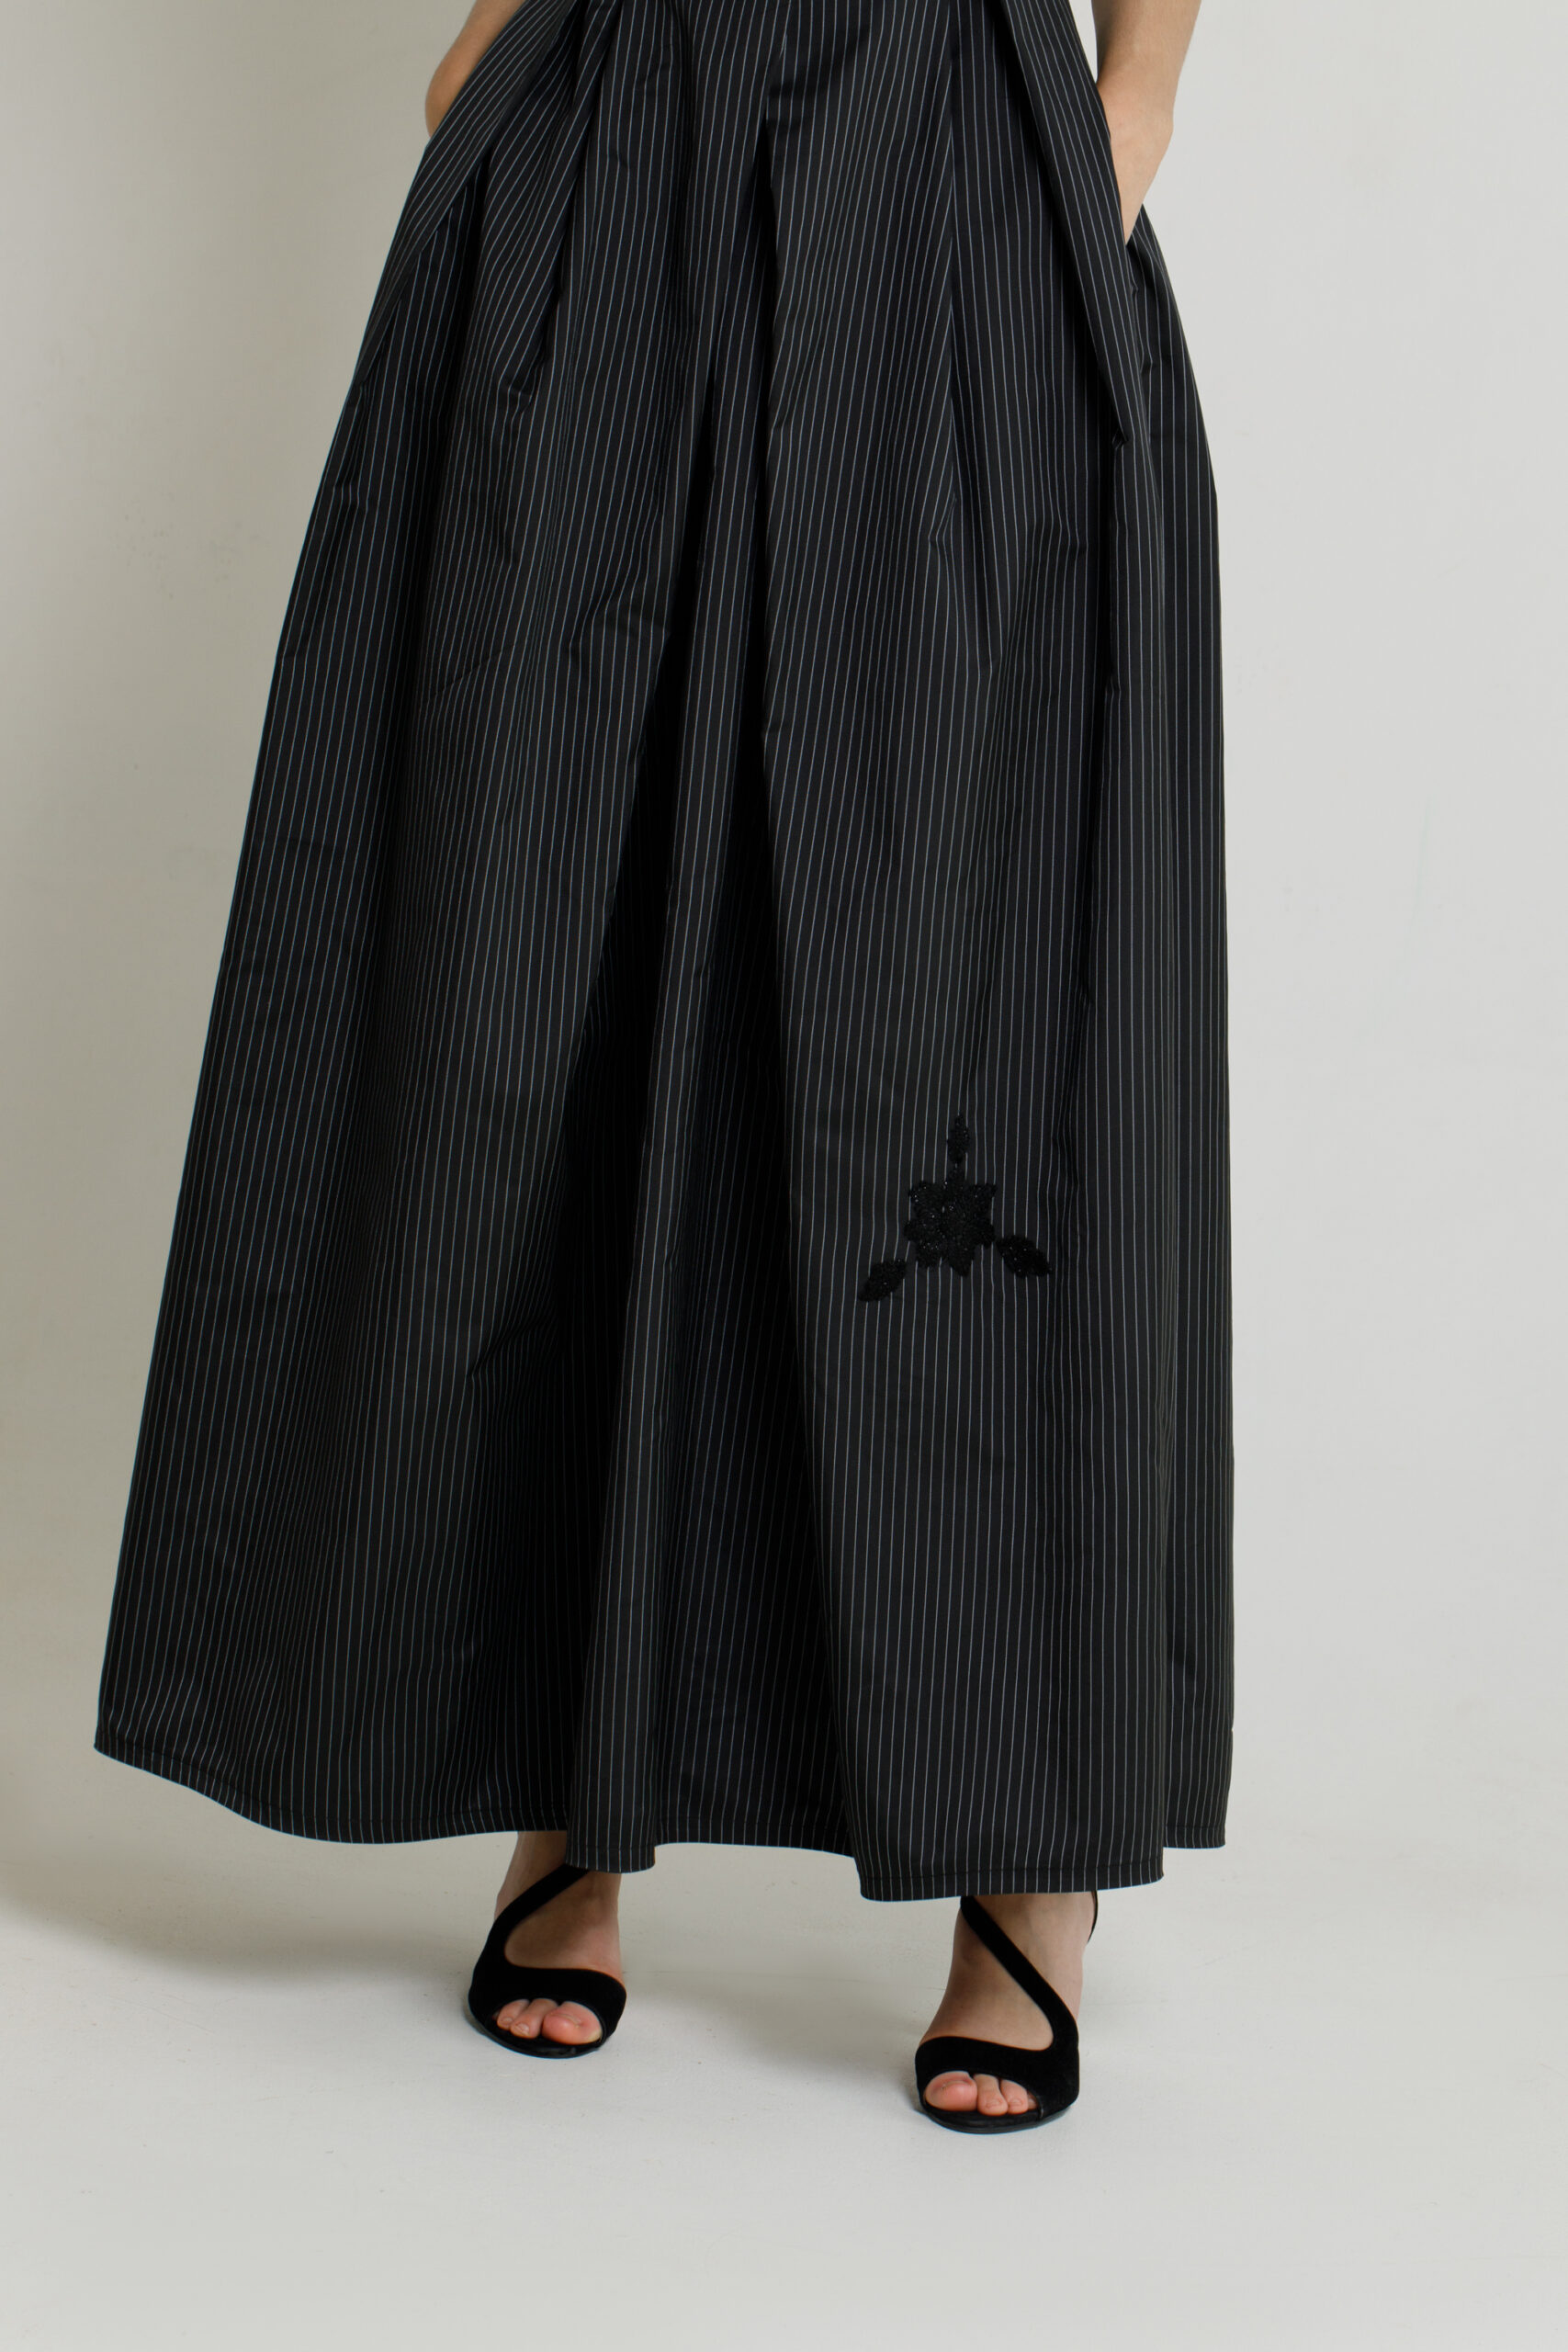 CHLOE elegant black taffeta and organza dress. Natural fabrics, original design, handmade embroidery